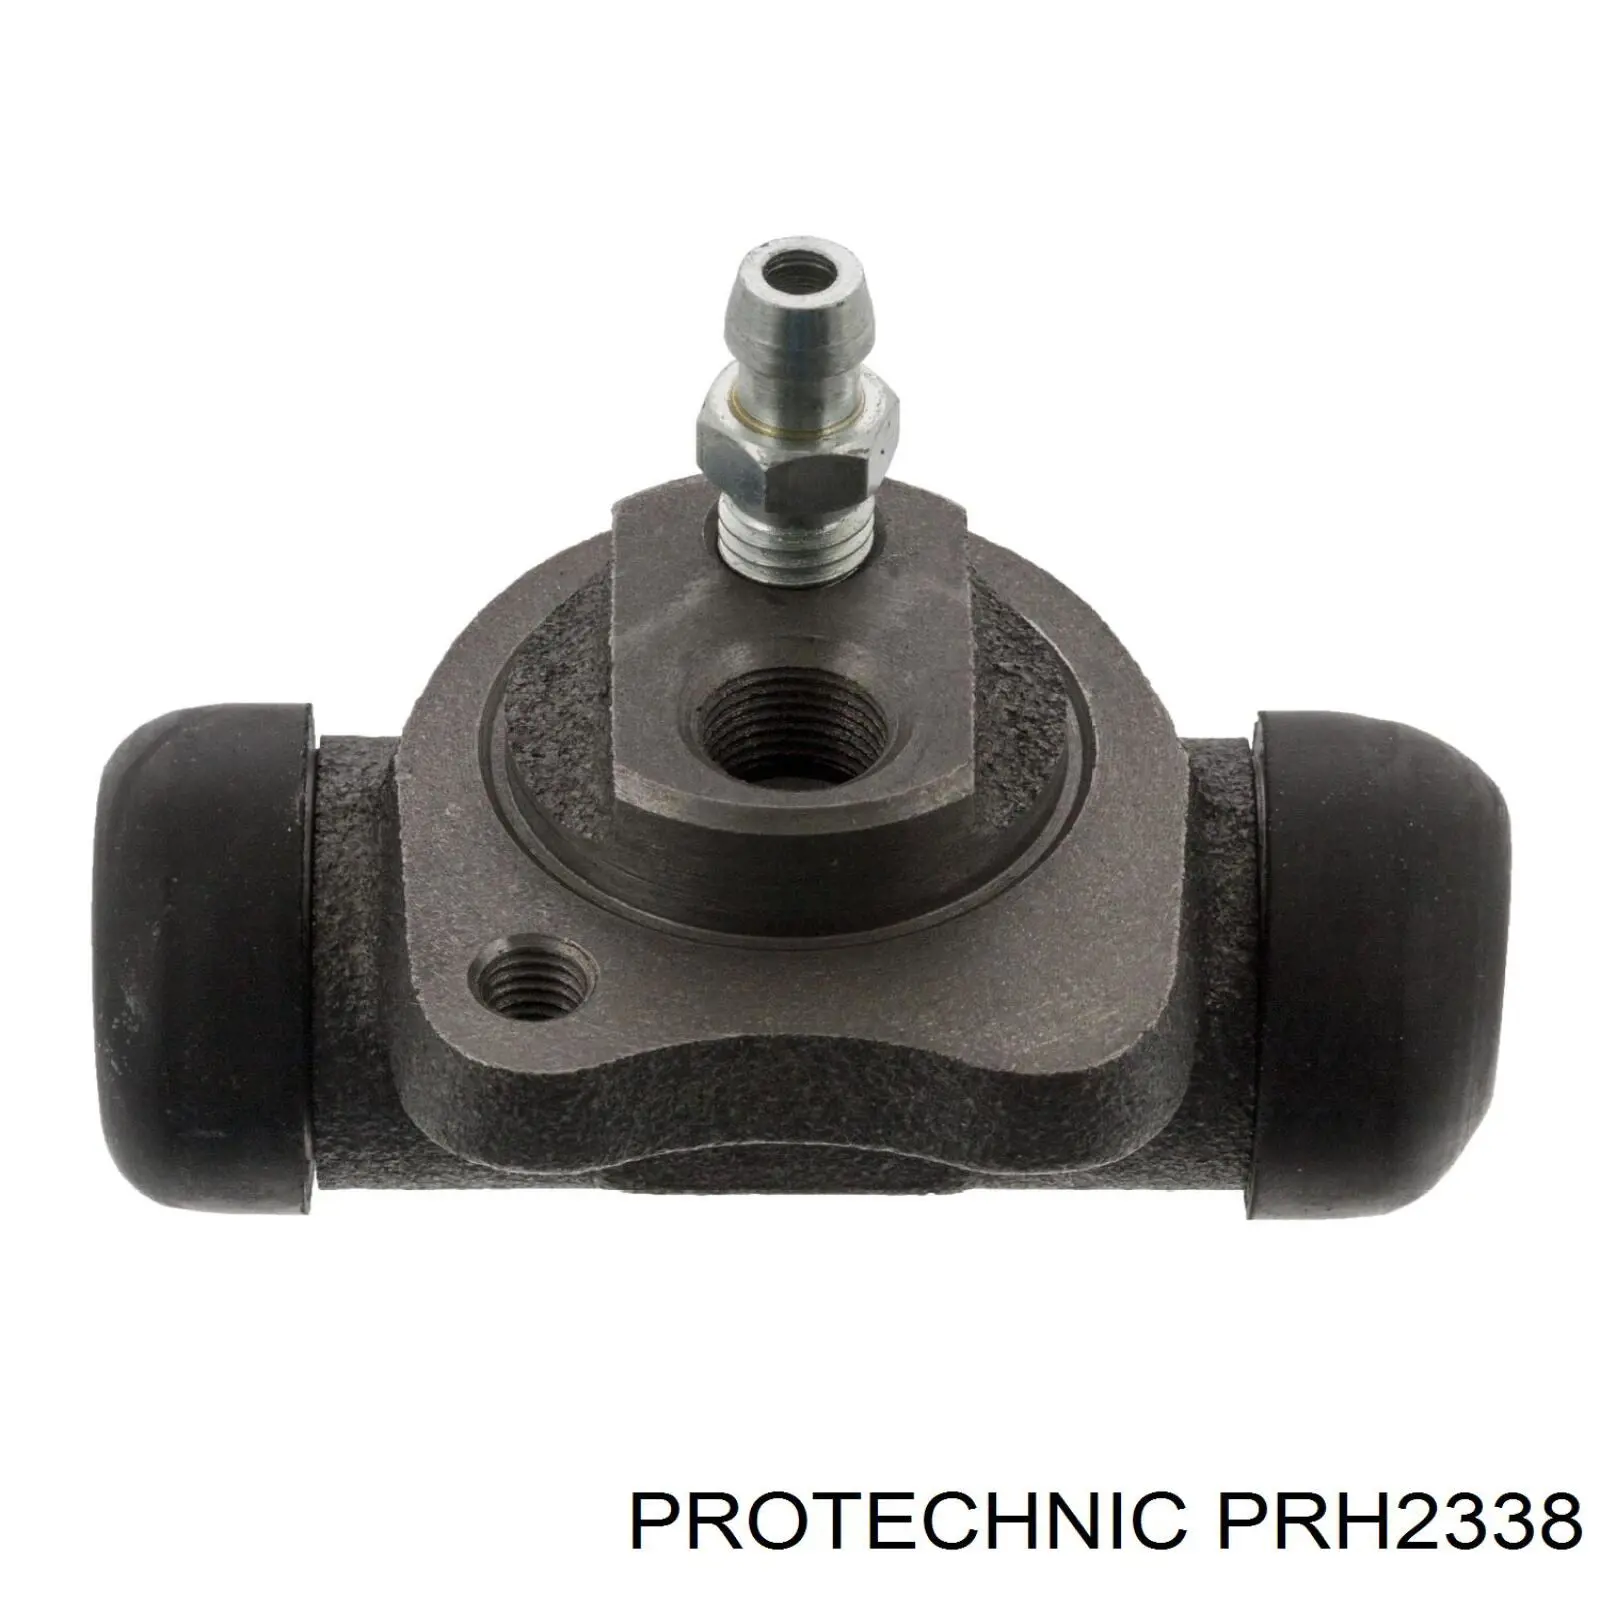 PRH2338 Protechnic cilindro de freno de rueda trasero